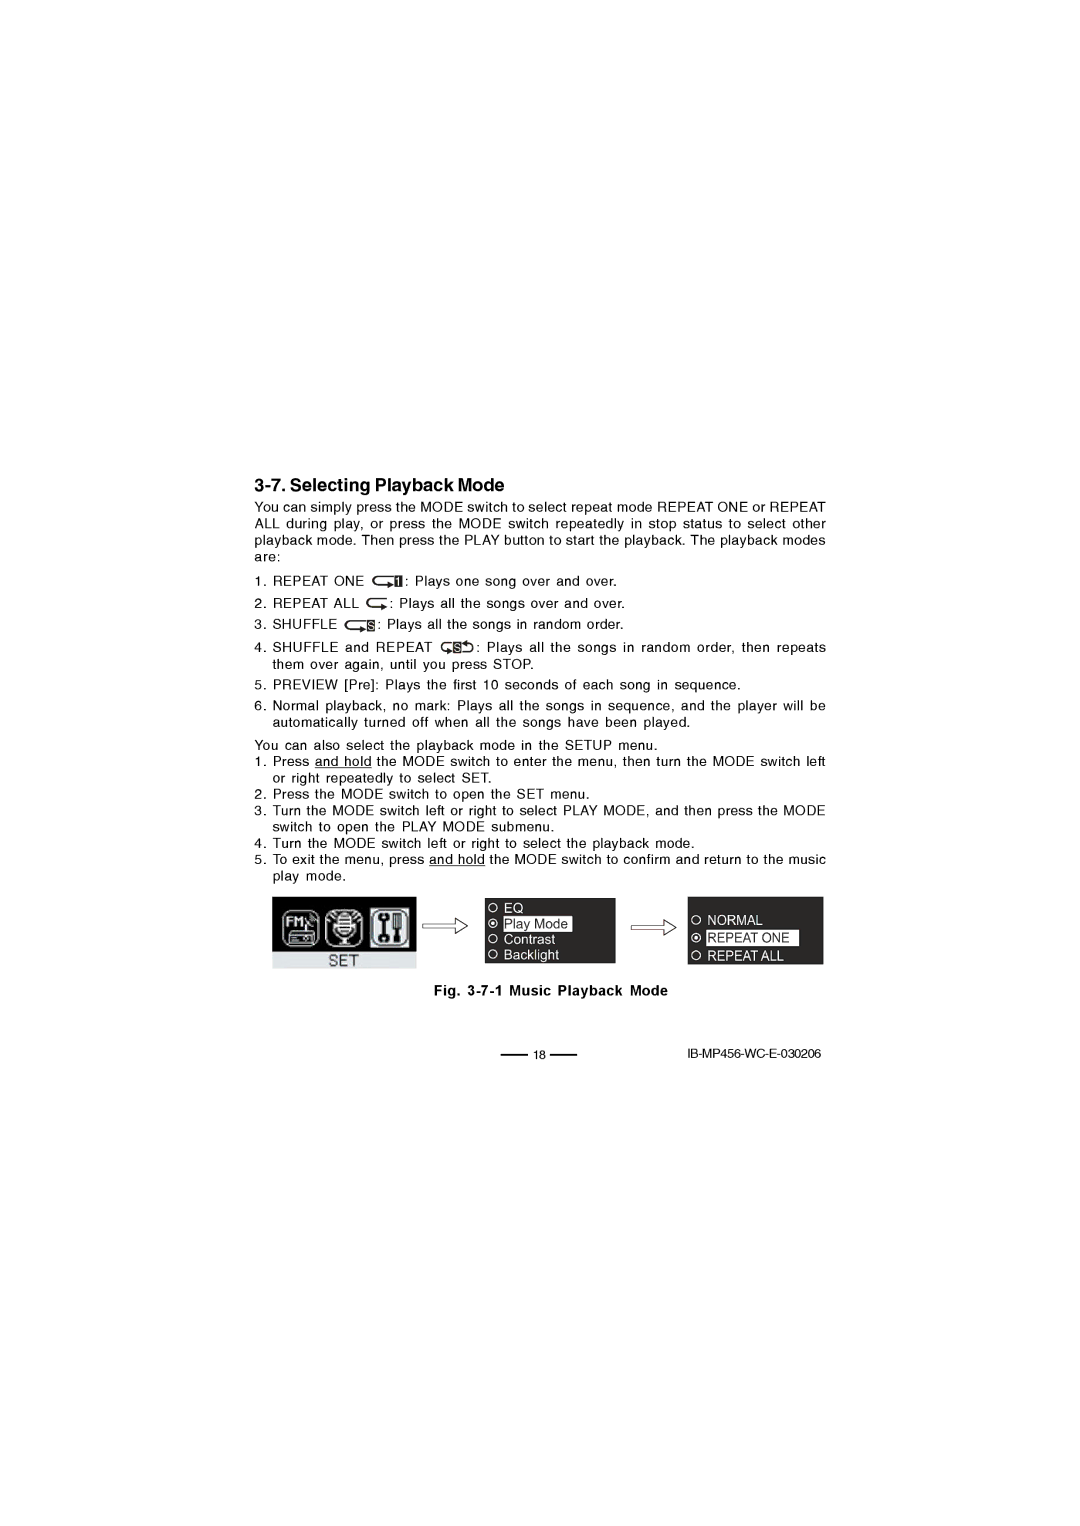 Lenoxx Electronics MP-456 operating instructions Selecting Playback Mode, Music Playback Mode 